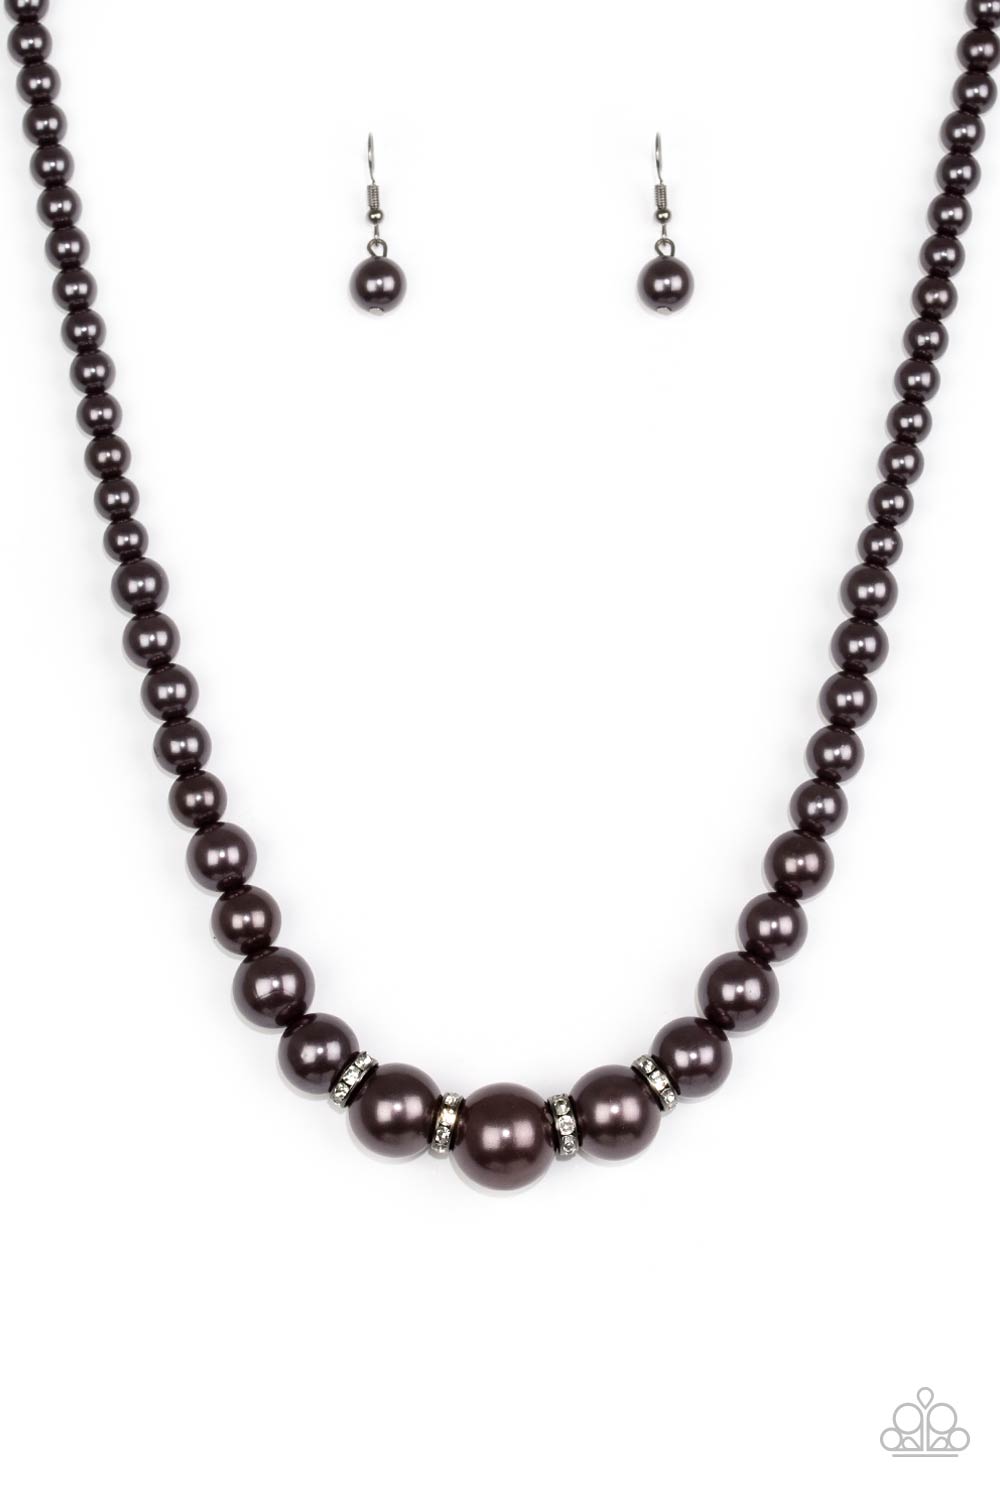 Paparazzi Accessories: Party Pearls - Black | Paparazzi Accessories